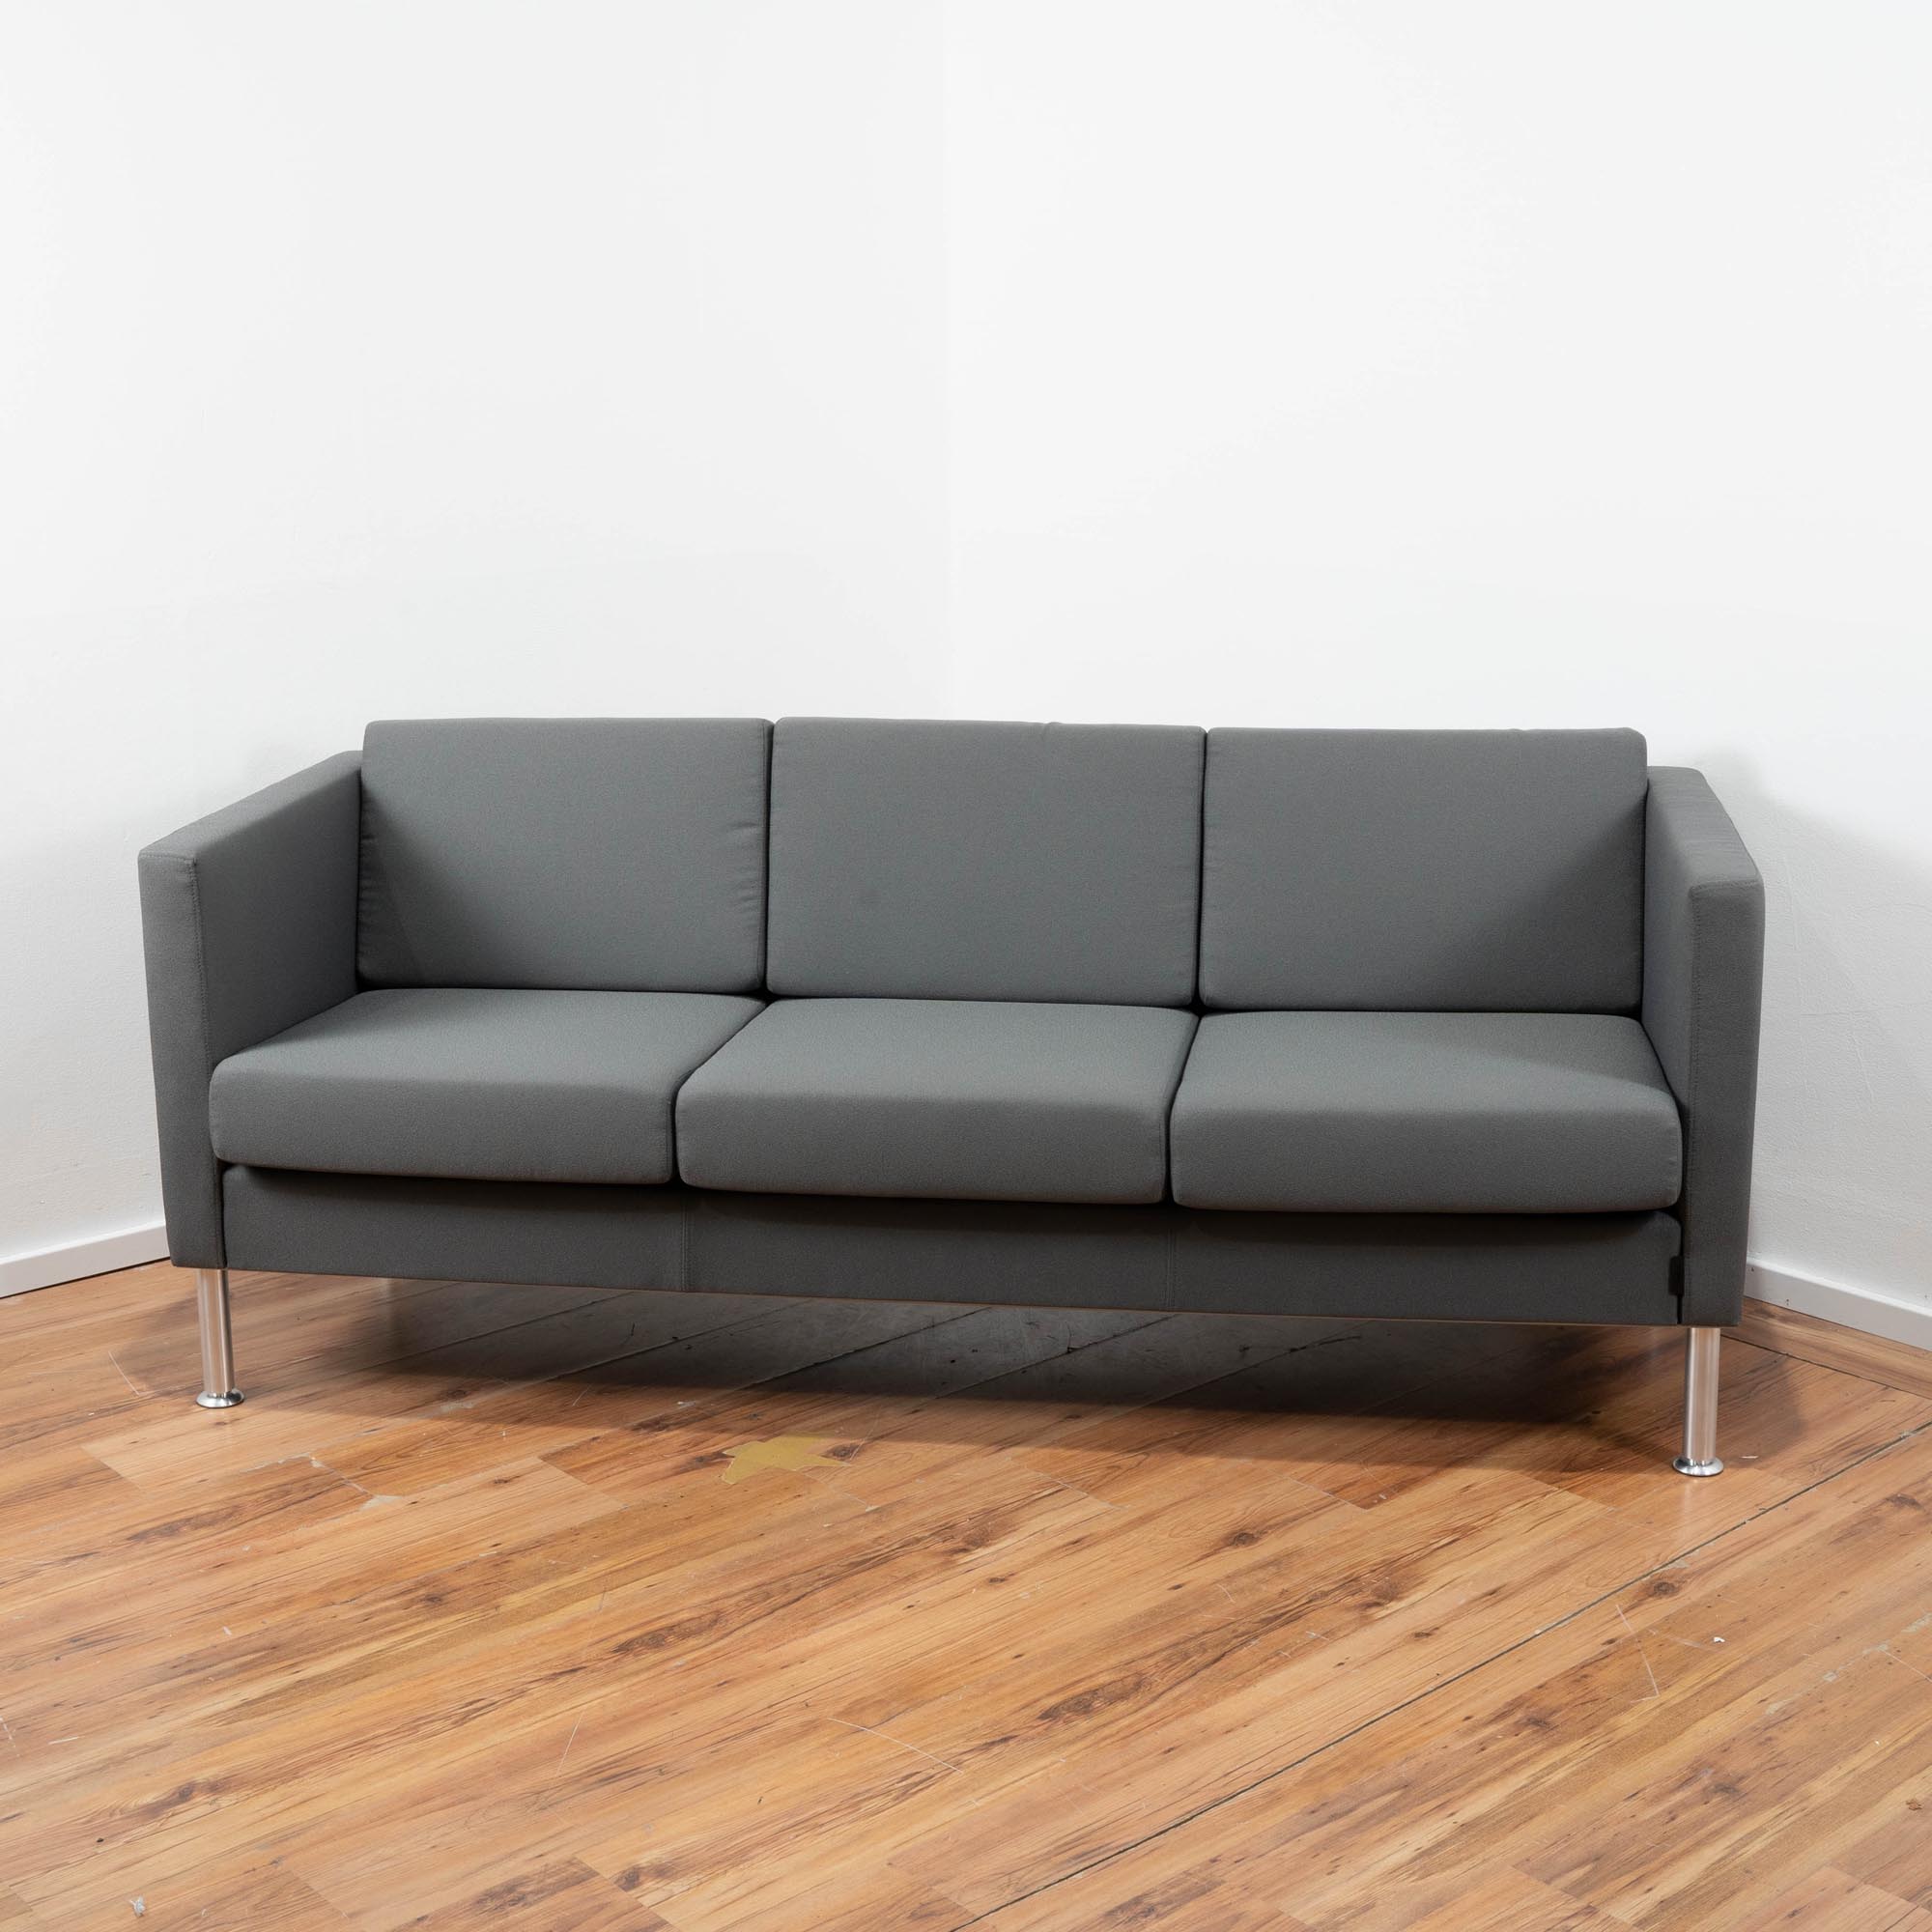 SMV 3-Sitzer Sofa - Stoff grau - 4-Fußgestell Chrom - Maße: 190 x 80 x 70 cm (L/B/T)